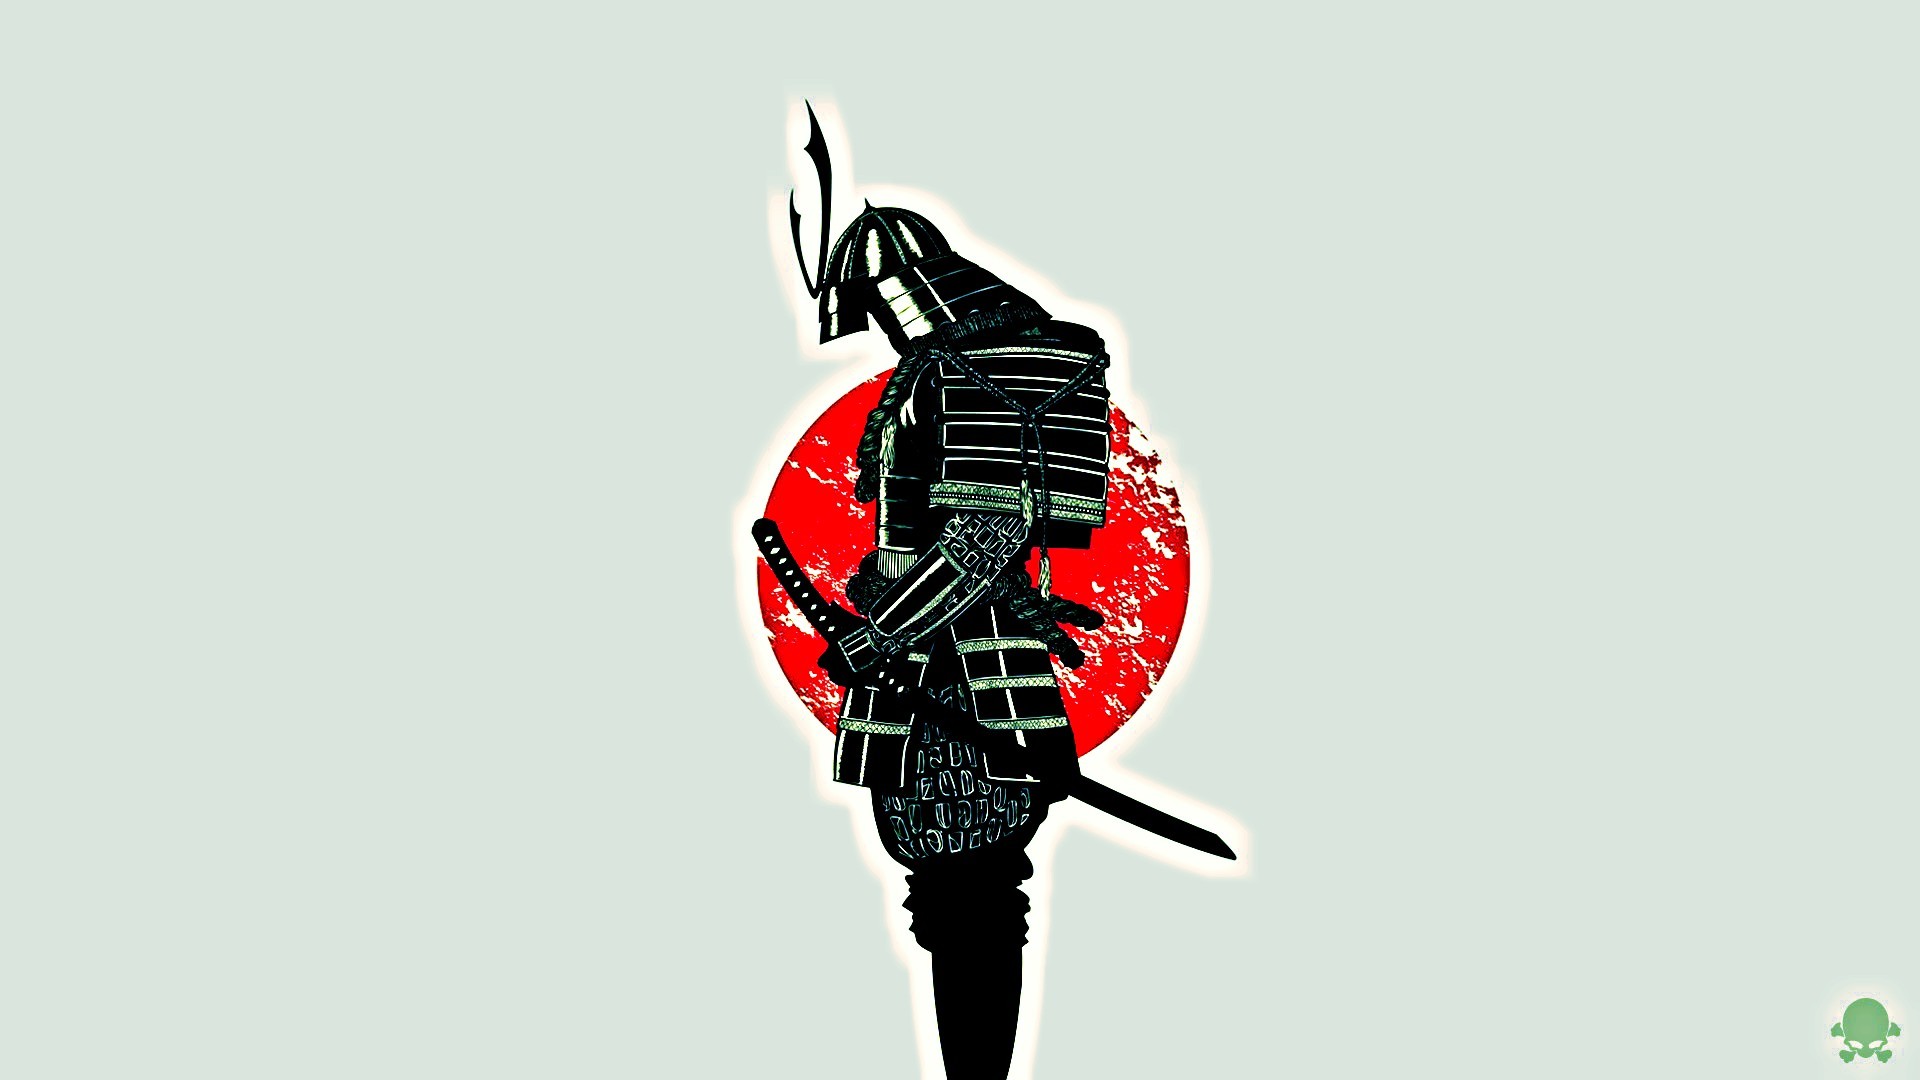 1920x1080 samurai minimalism japan flag wallpaper JPG 124 kB Gallery HD Wallpaper